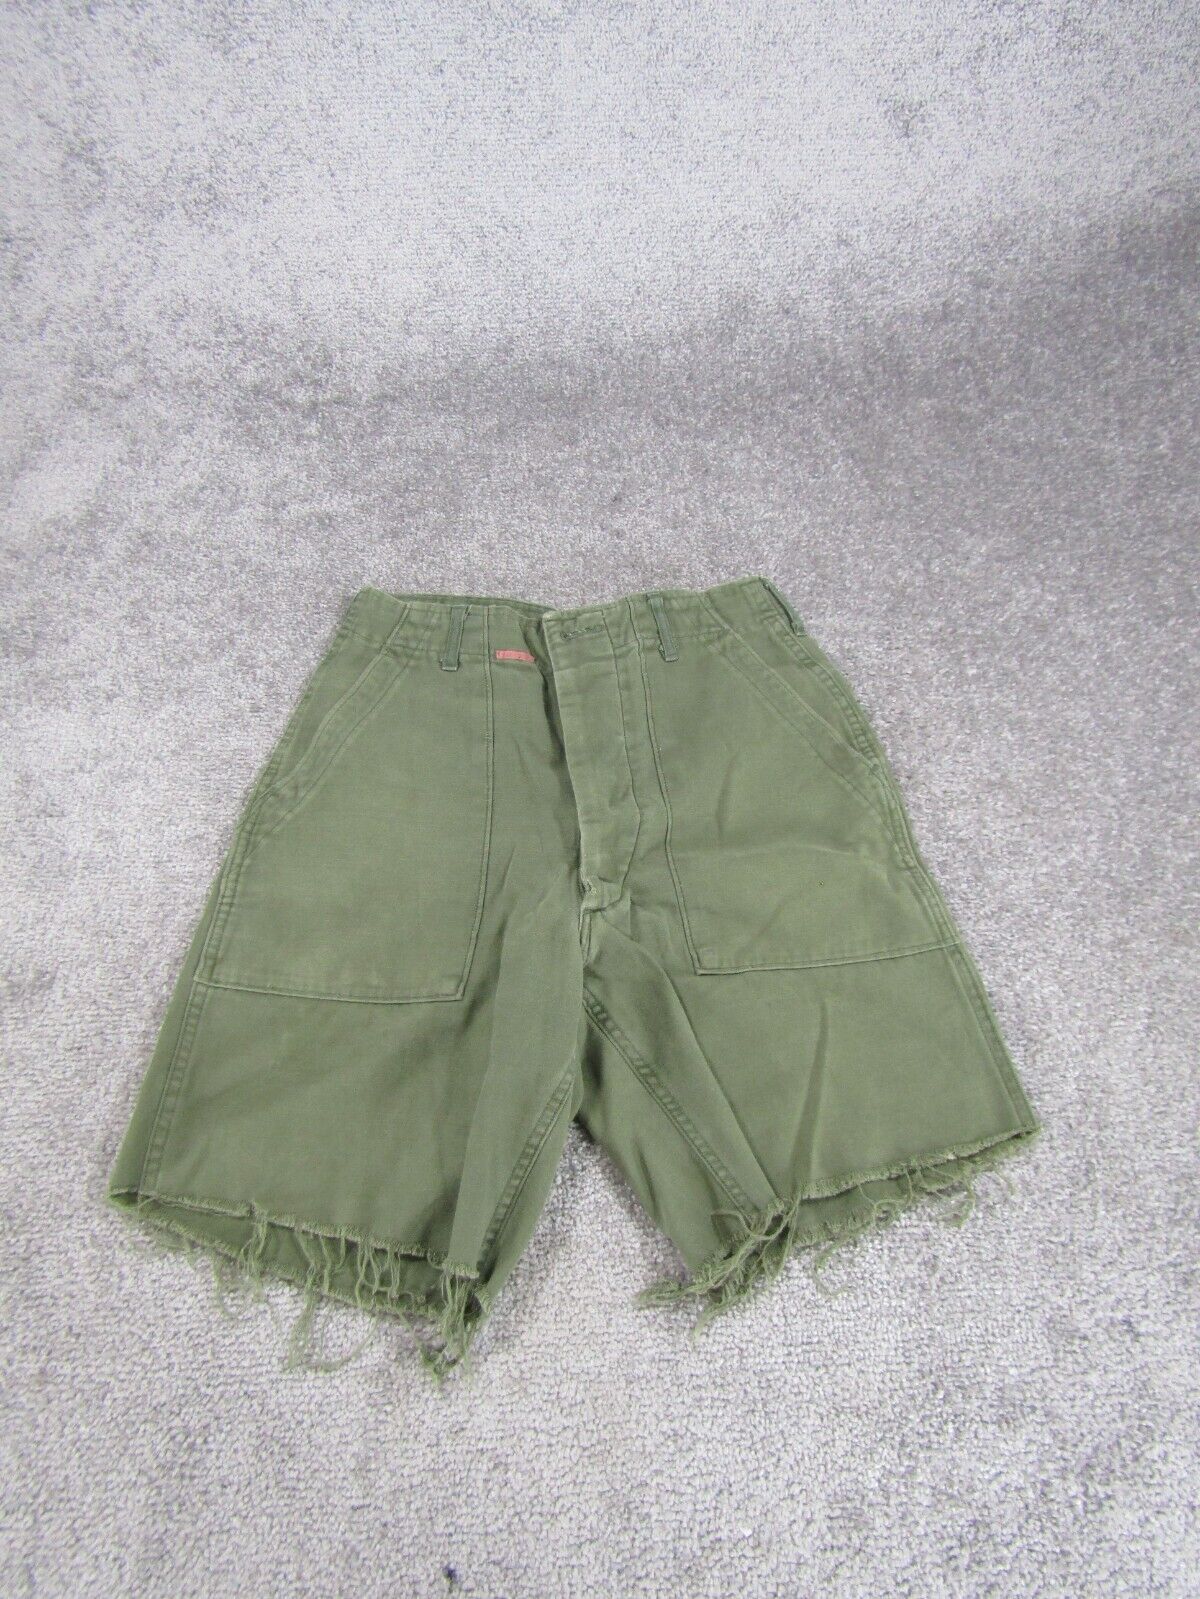 Vintage Og 107 Shorts Mens 30 Cutoff Pants Green Vietnam Military Cotton Sateen